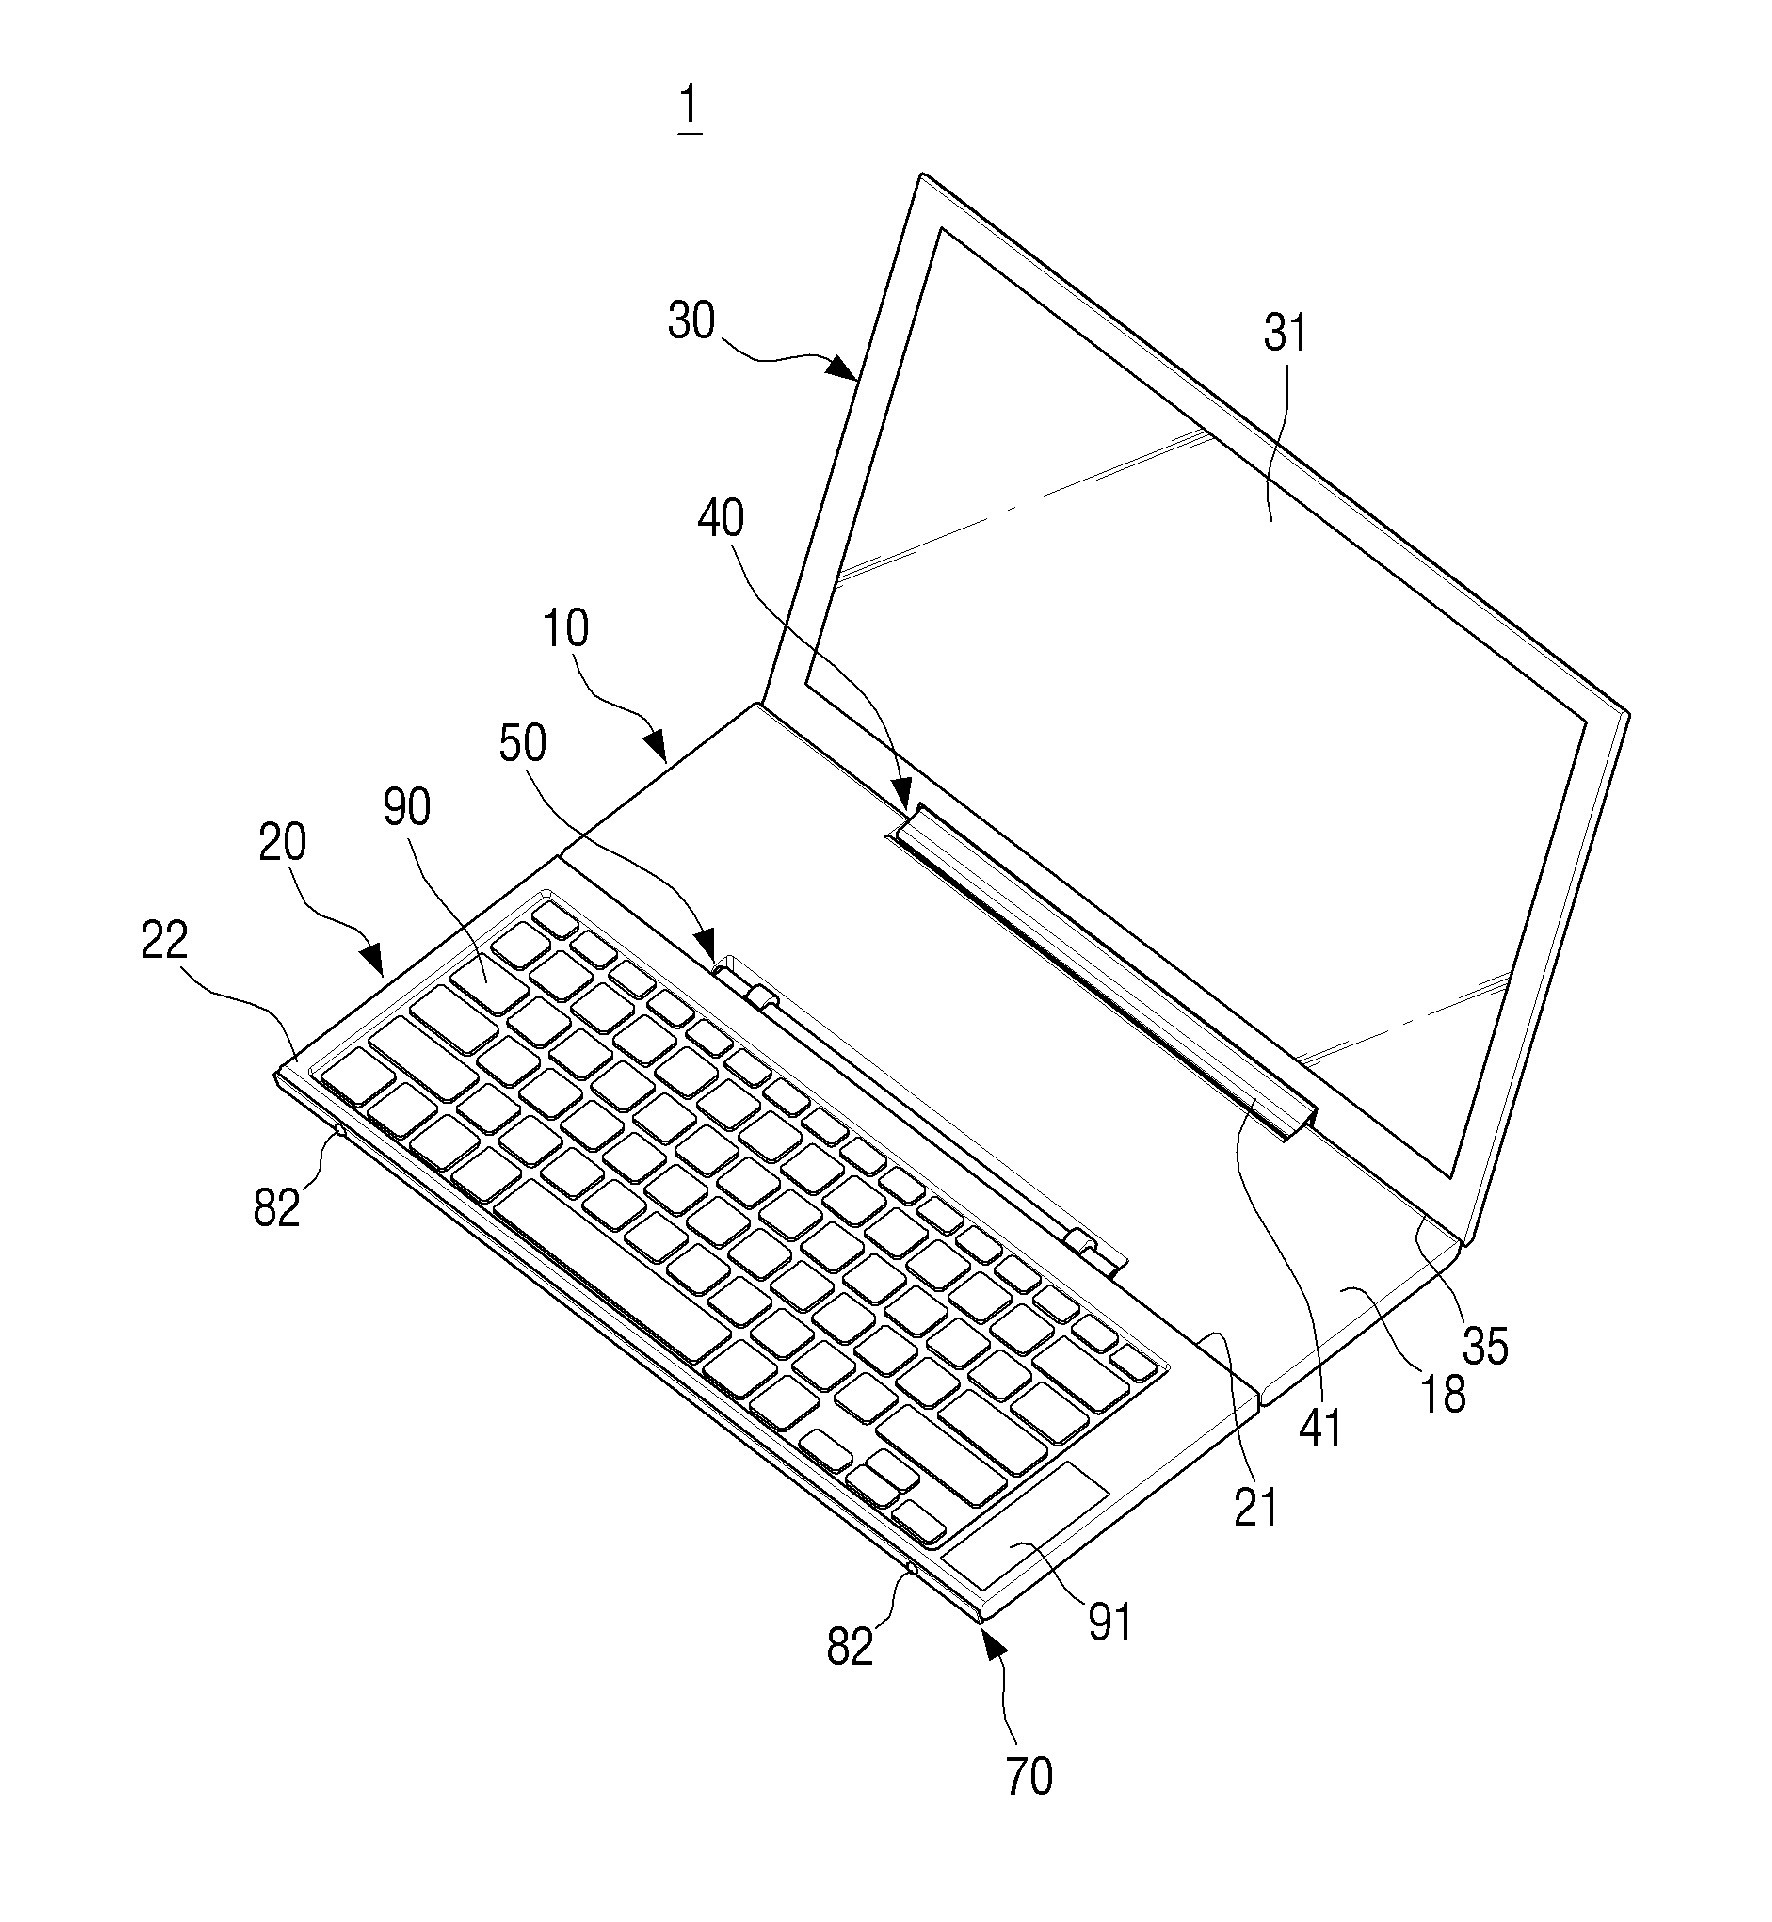 Foldable computing apparatus and method of erecting display unit